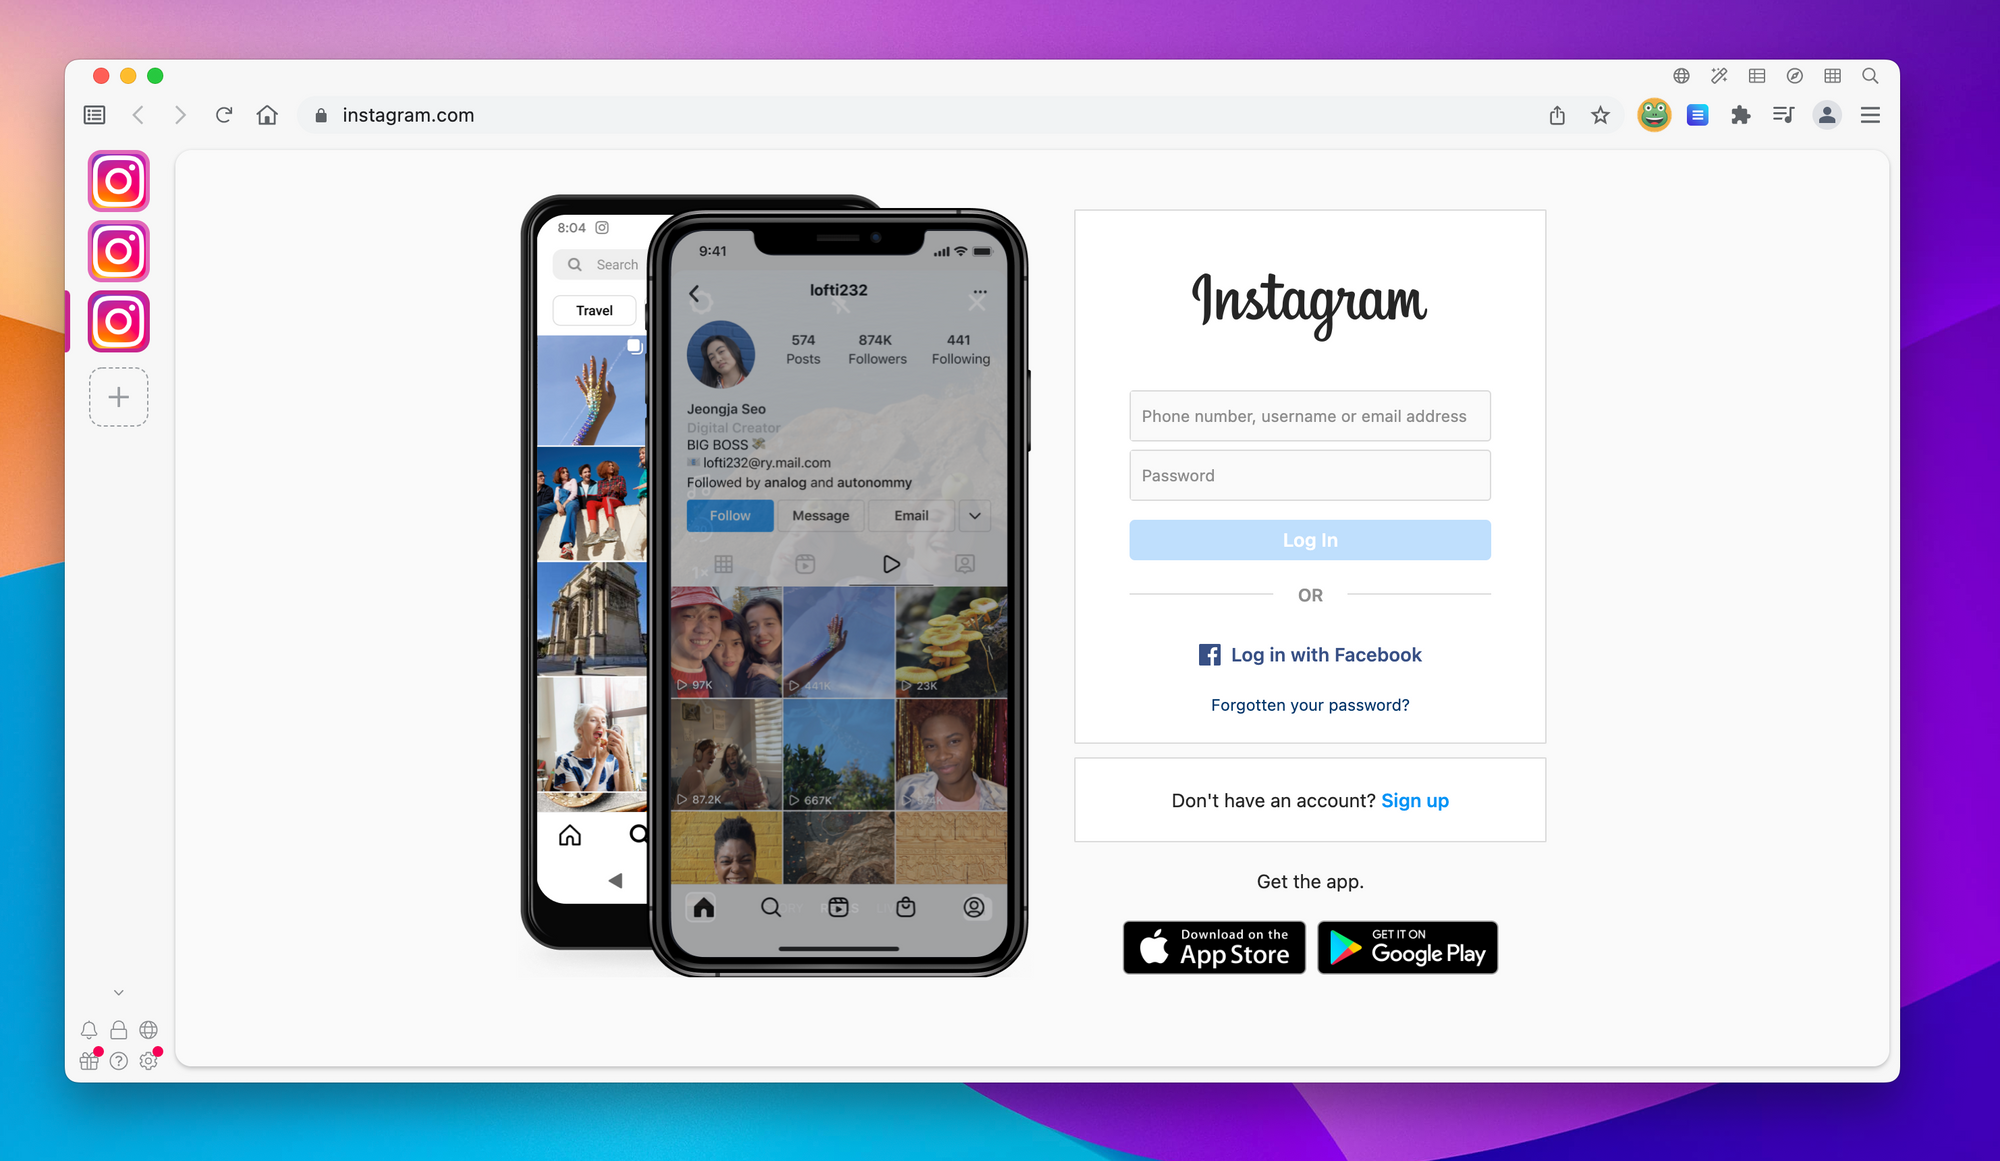 How to get an Instagram app for desktop (Mac or PC)